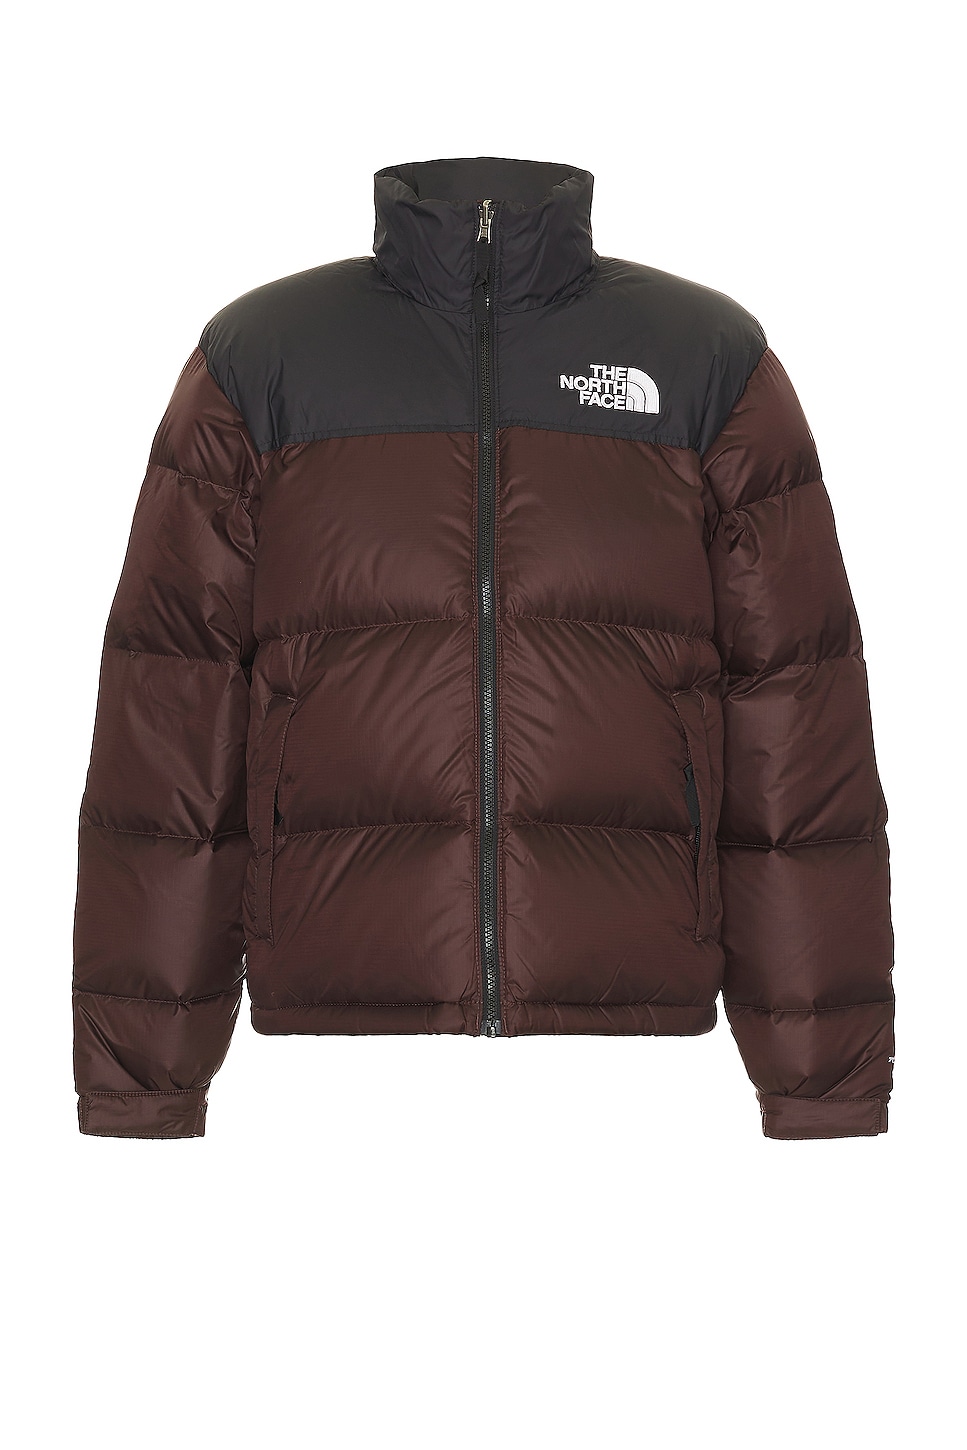 Image 1 of The North Face 1996 Retro Nuptse Jacket in Coal Brown & Tnf Black